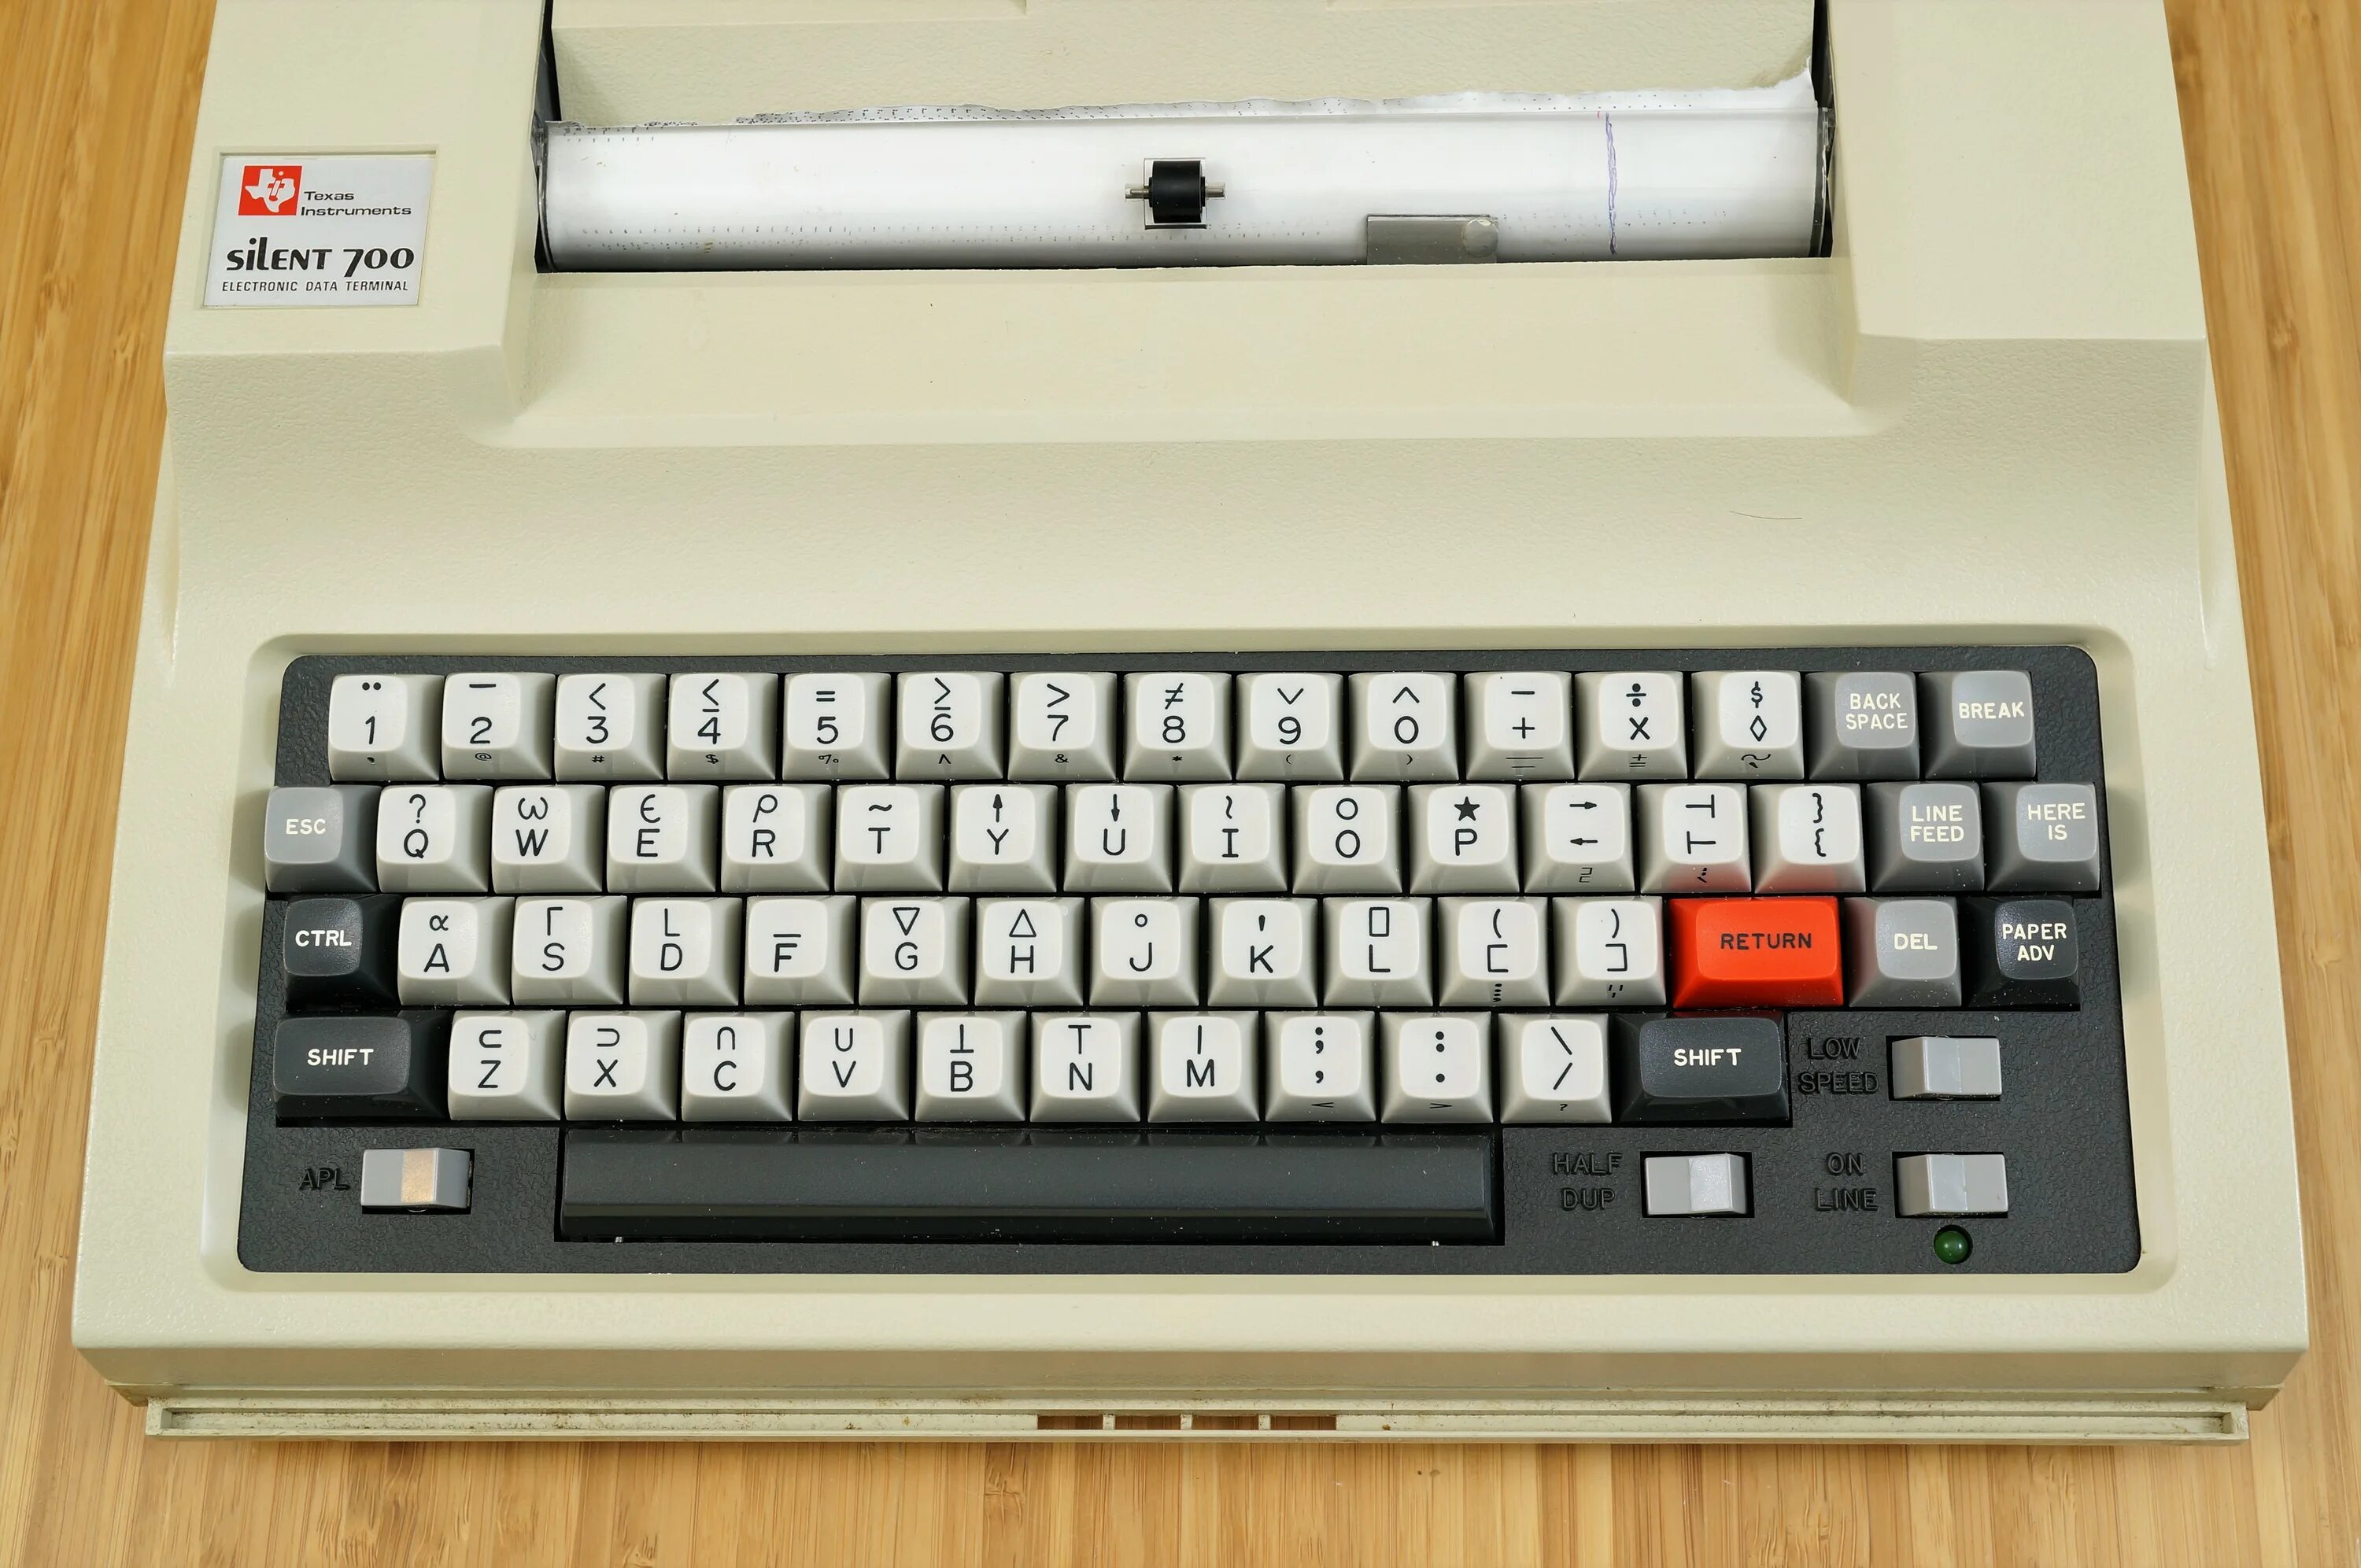 Unknown Processor. 1970s teleprinter Machine. Импортный факс Silent 700 цена.